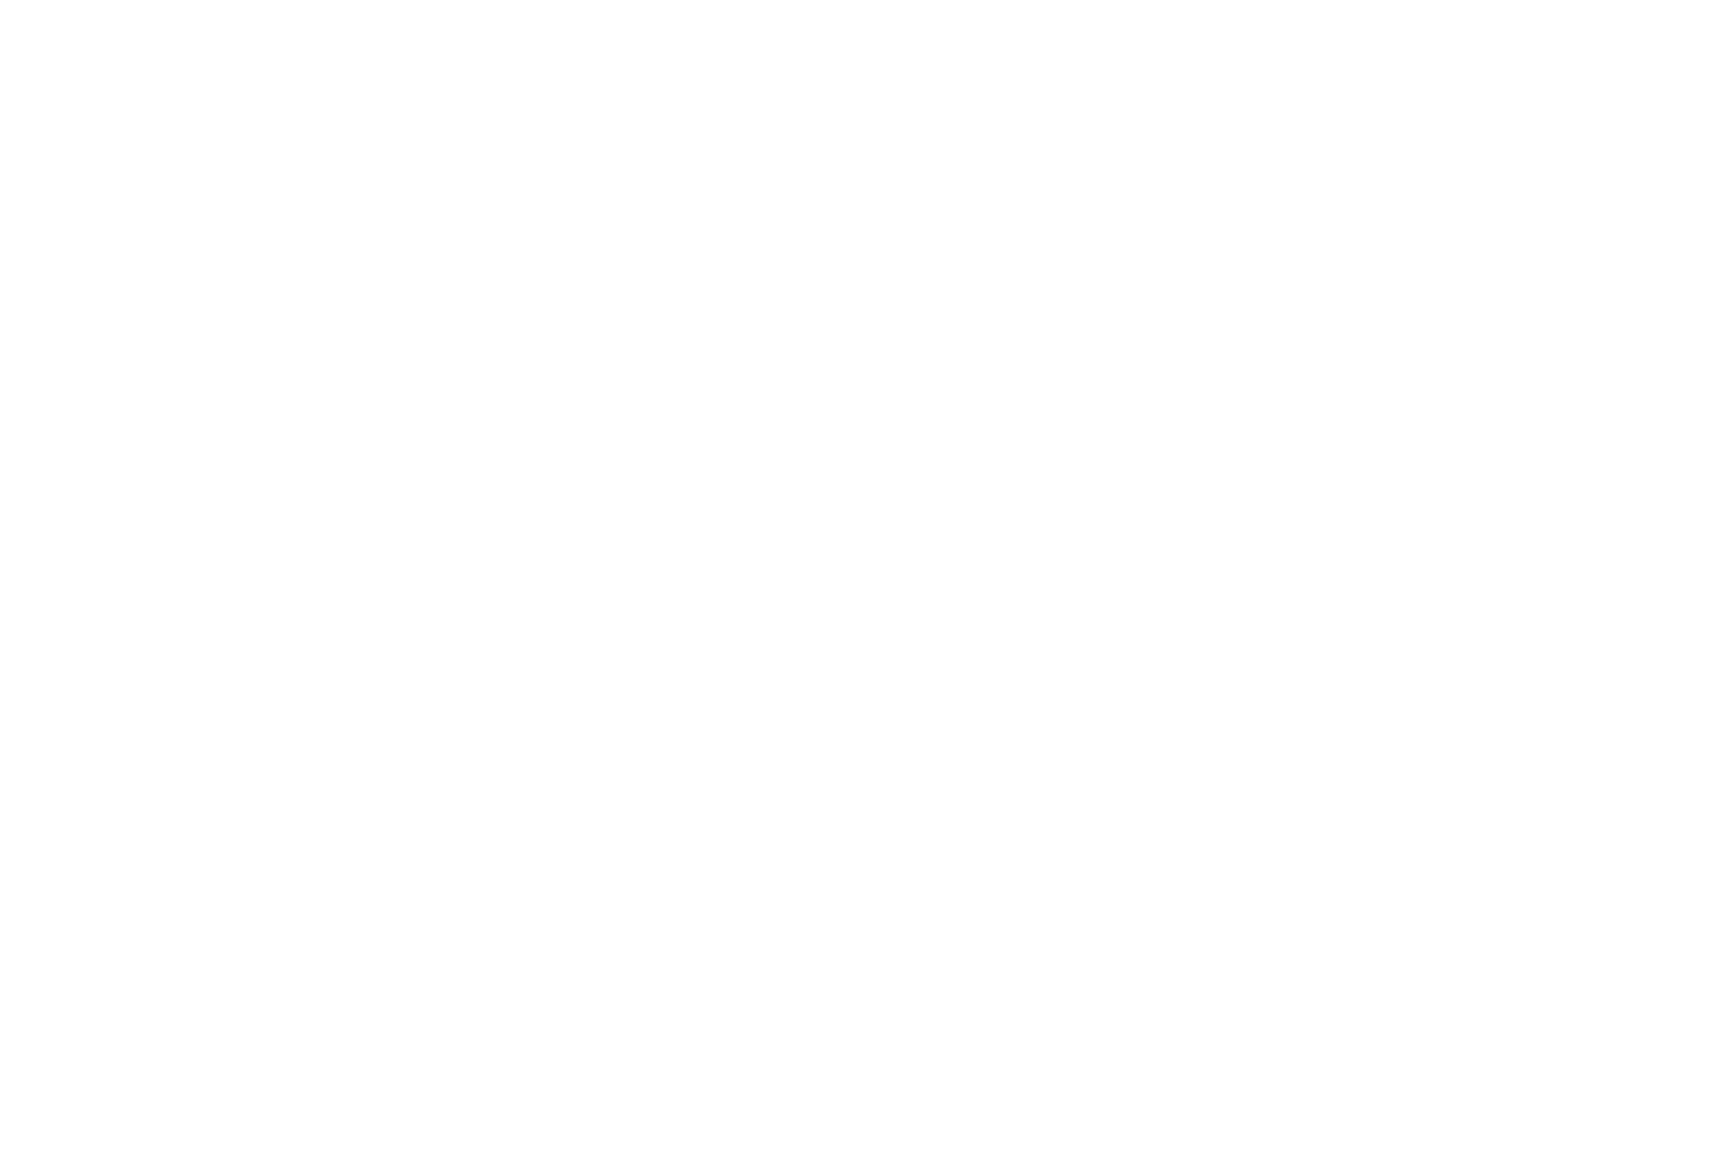 SEMI-FINALIST - Edmonton Short Film Festival - 2019